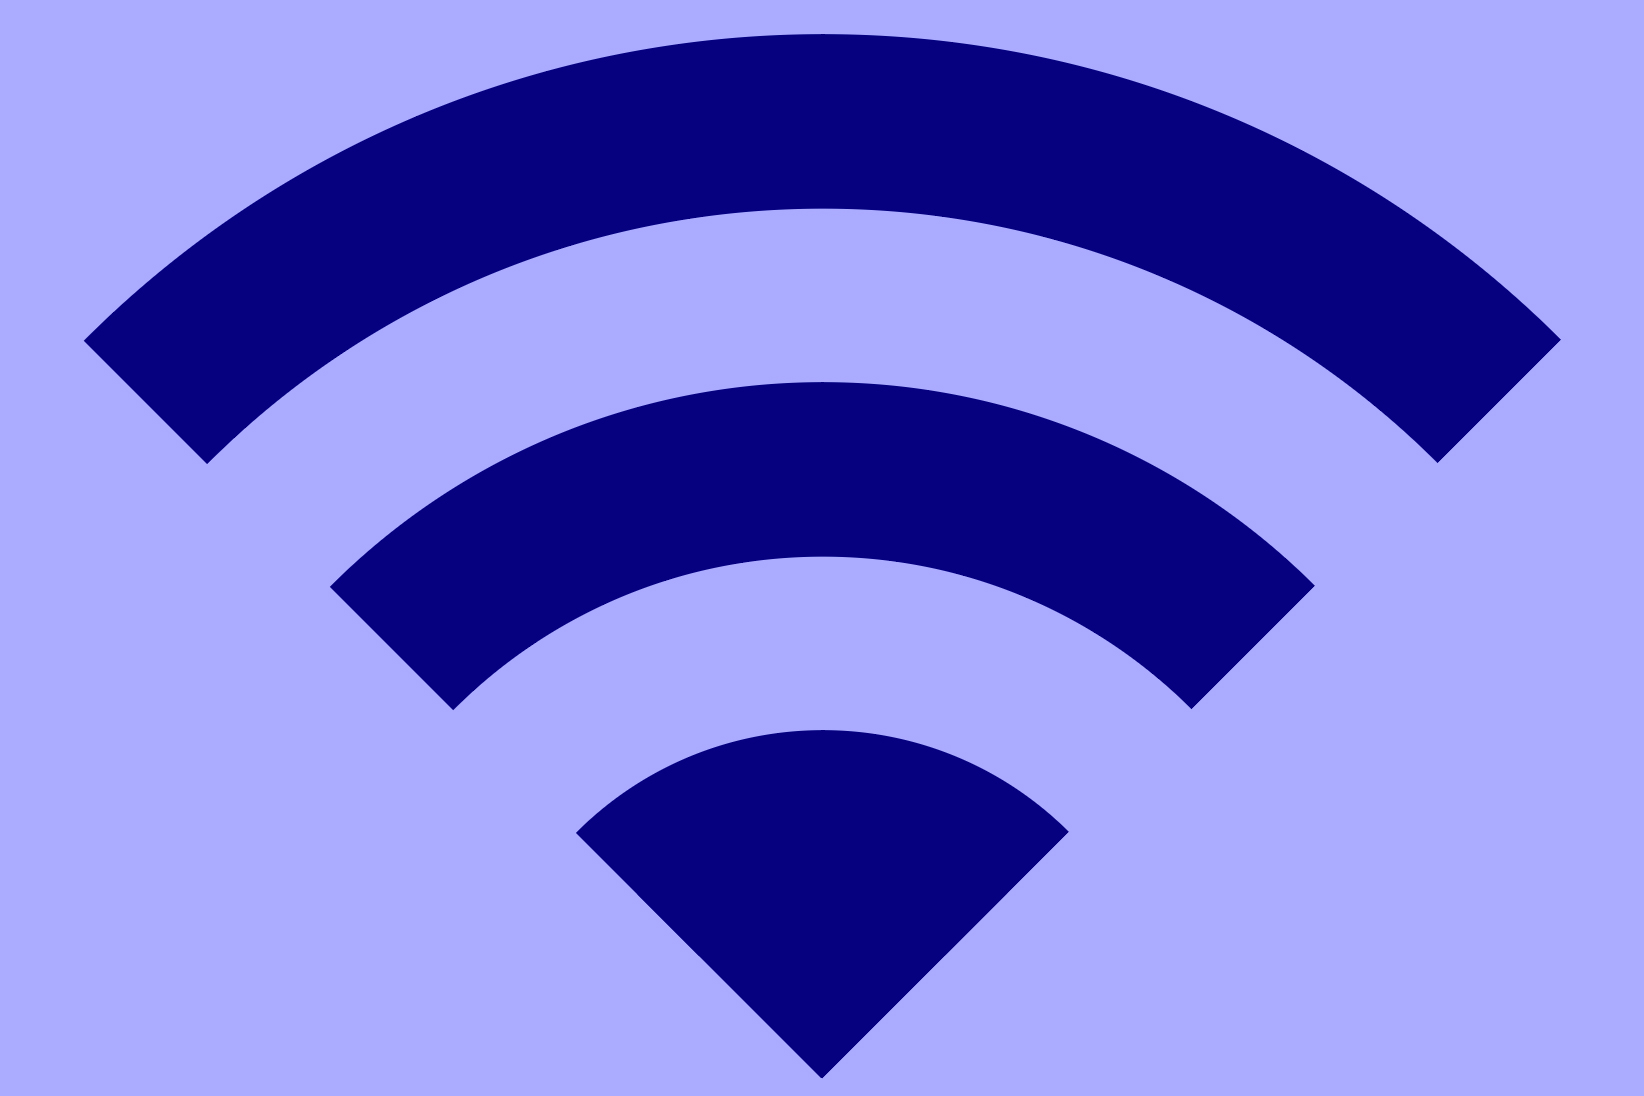 Giant Wi-Fi symbol created in Adobe Illustrator